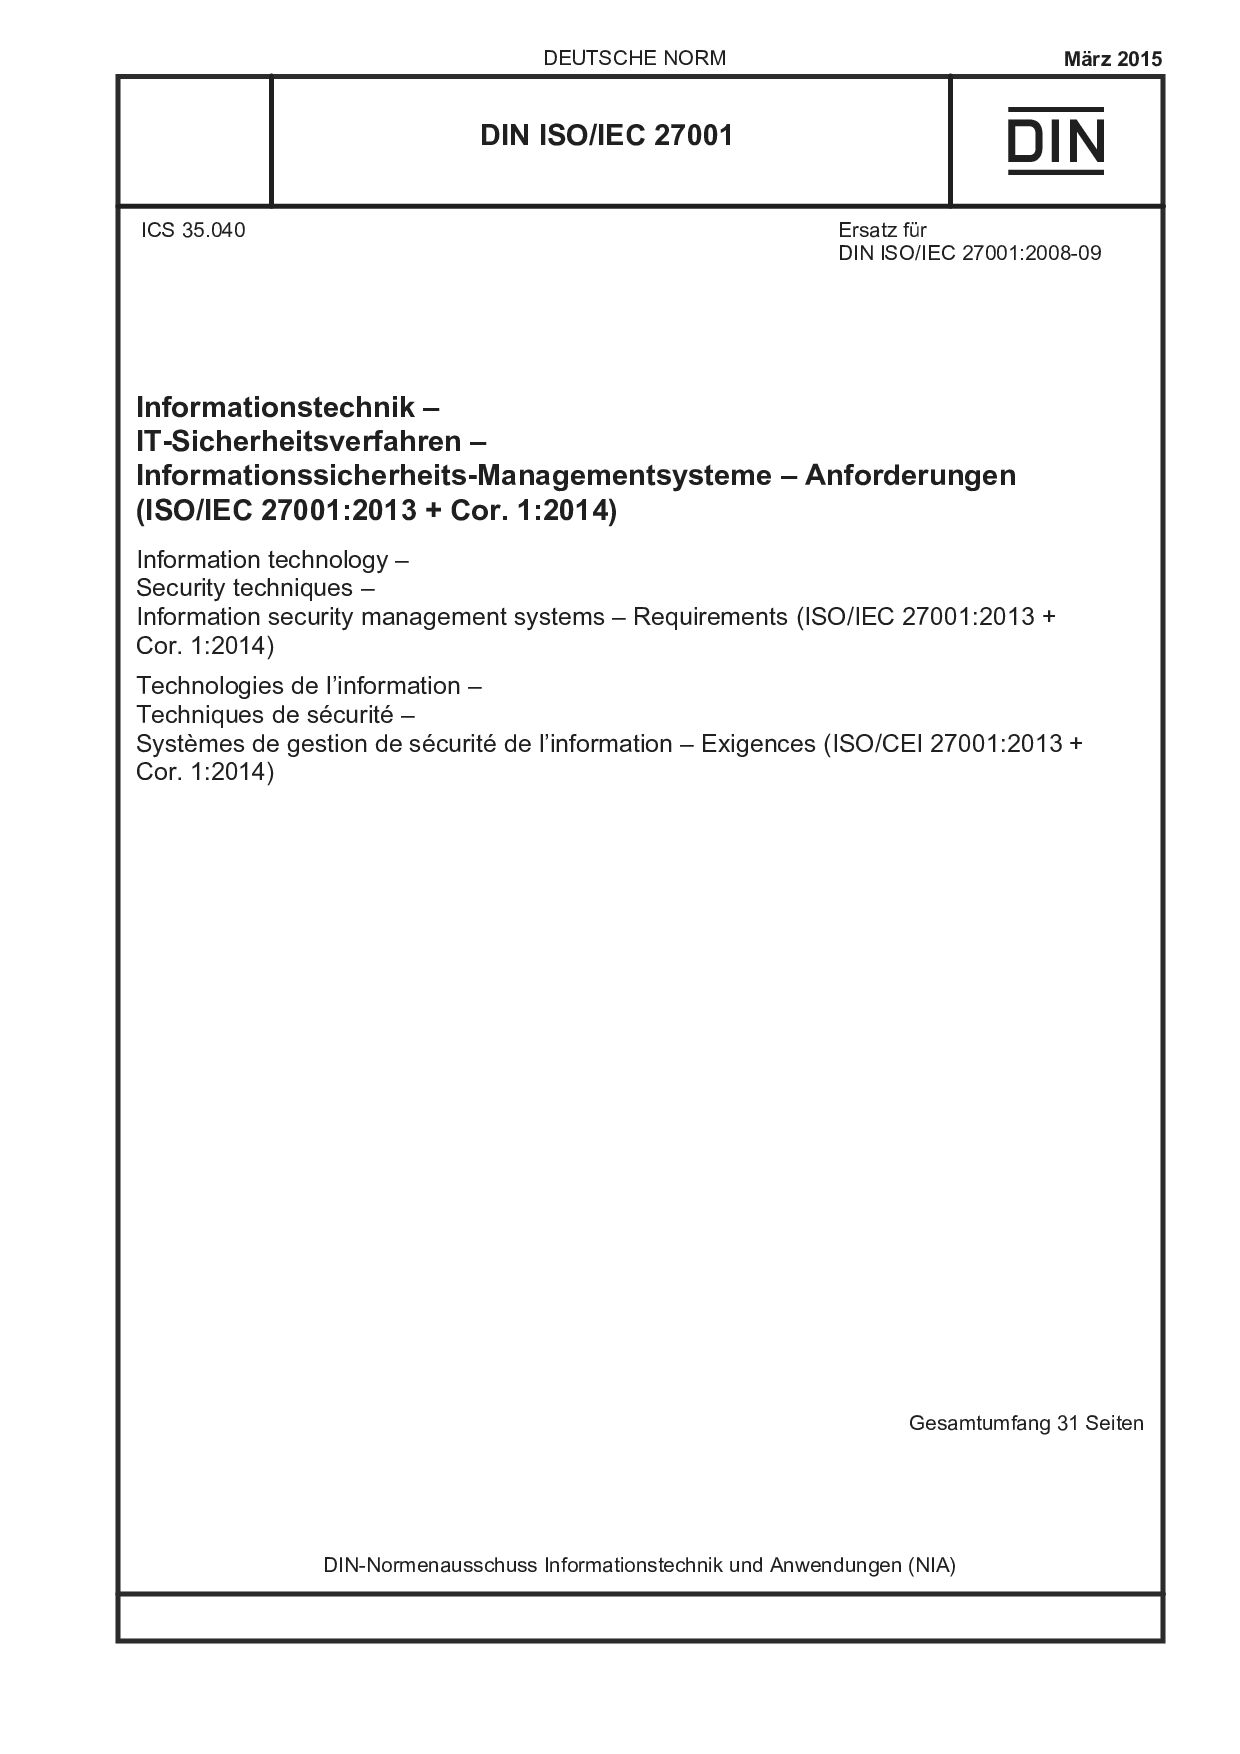 DIN ISO/IEC 27001:2015